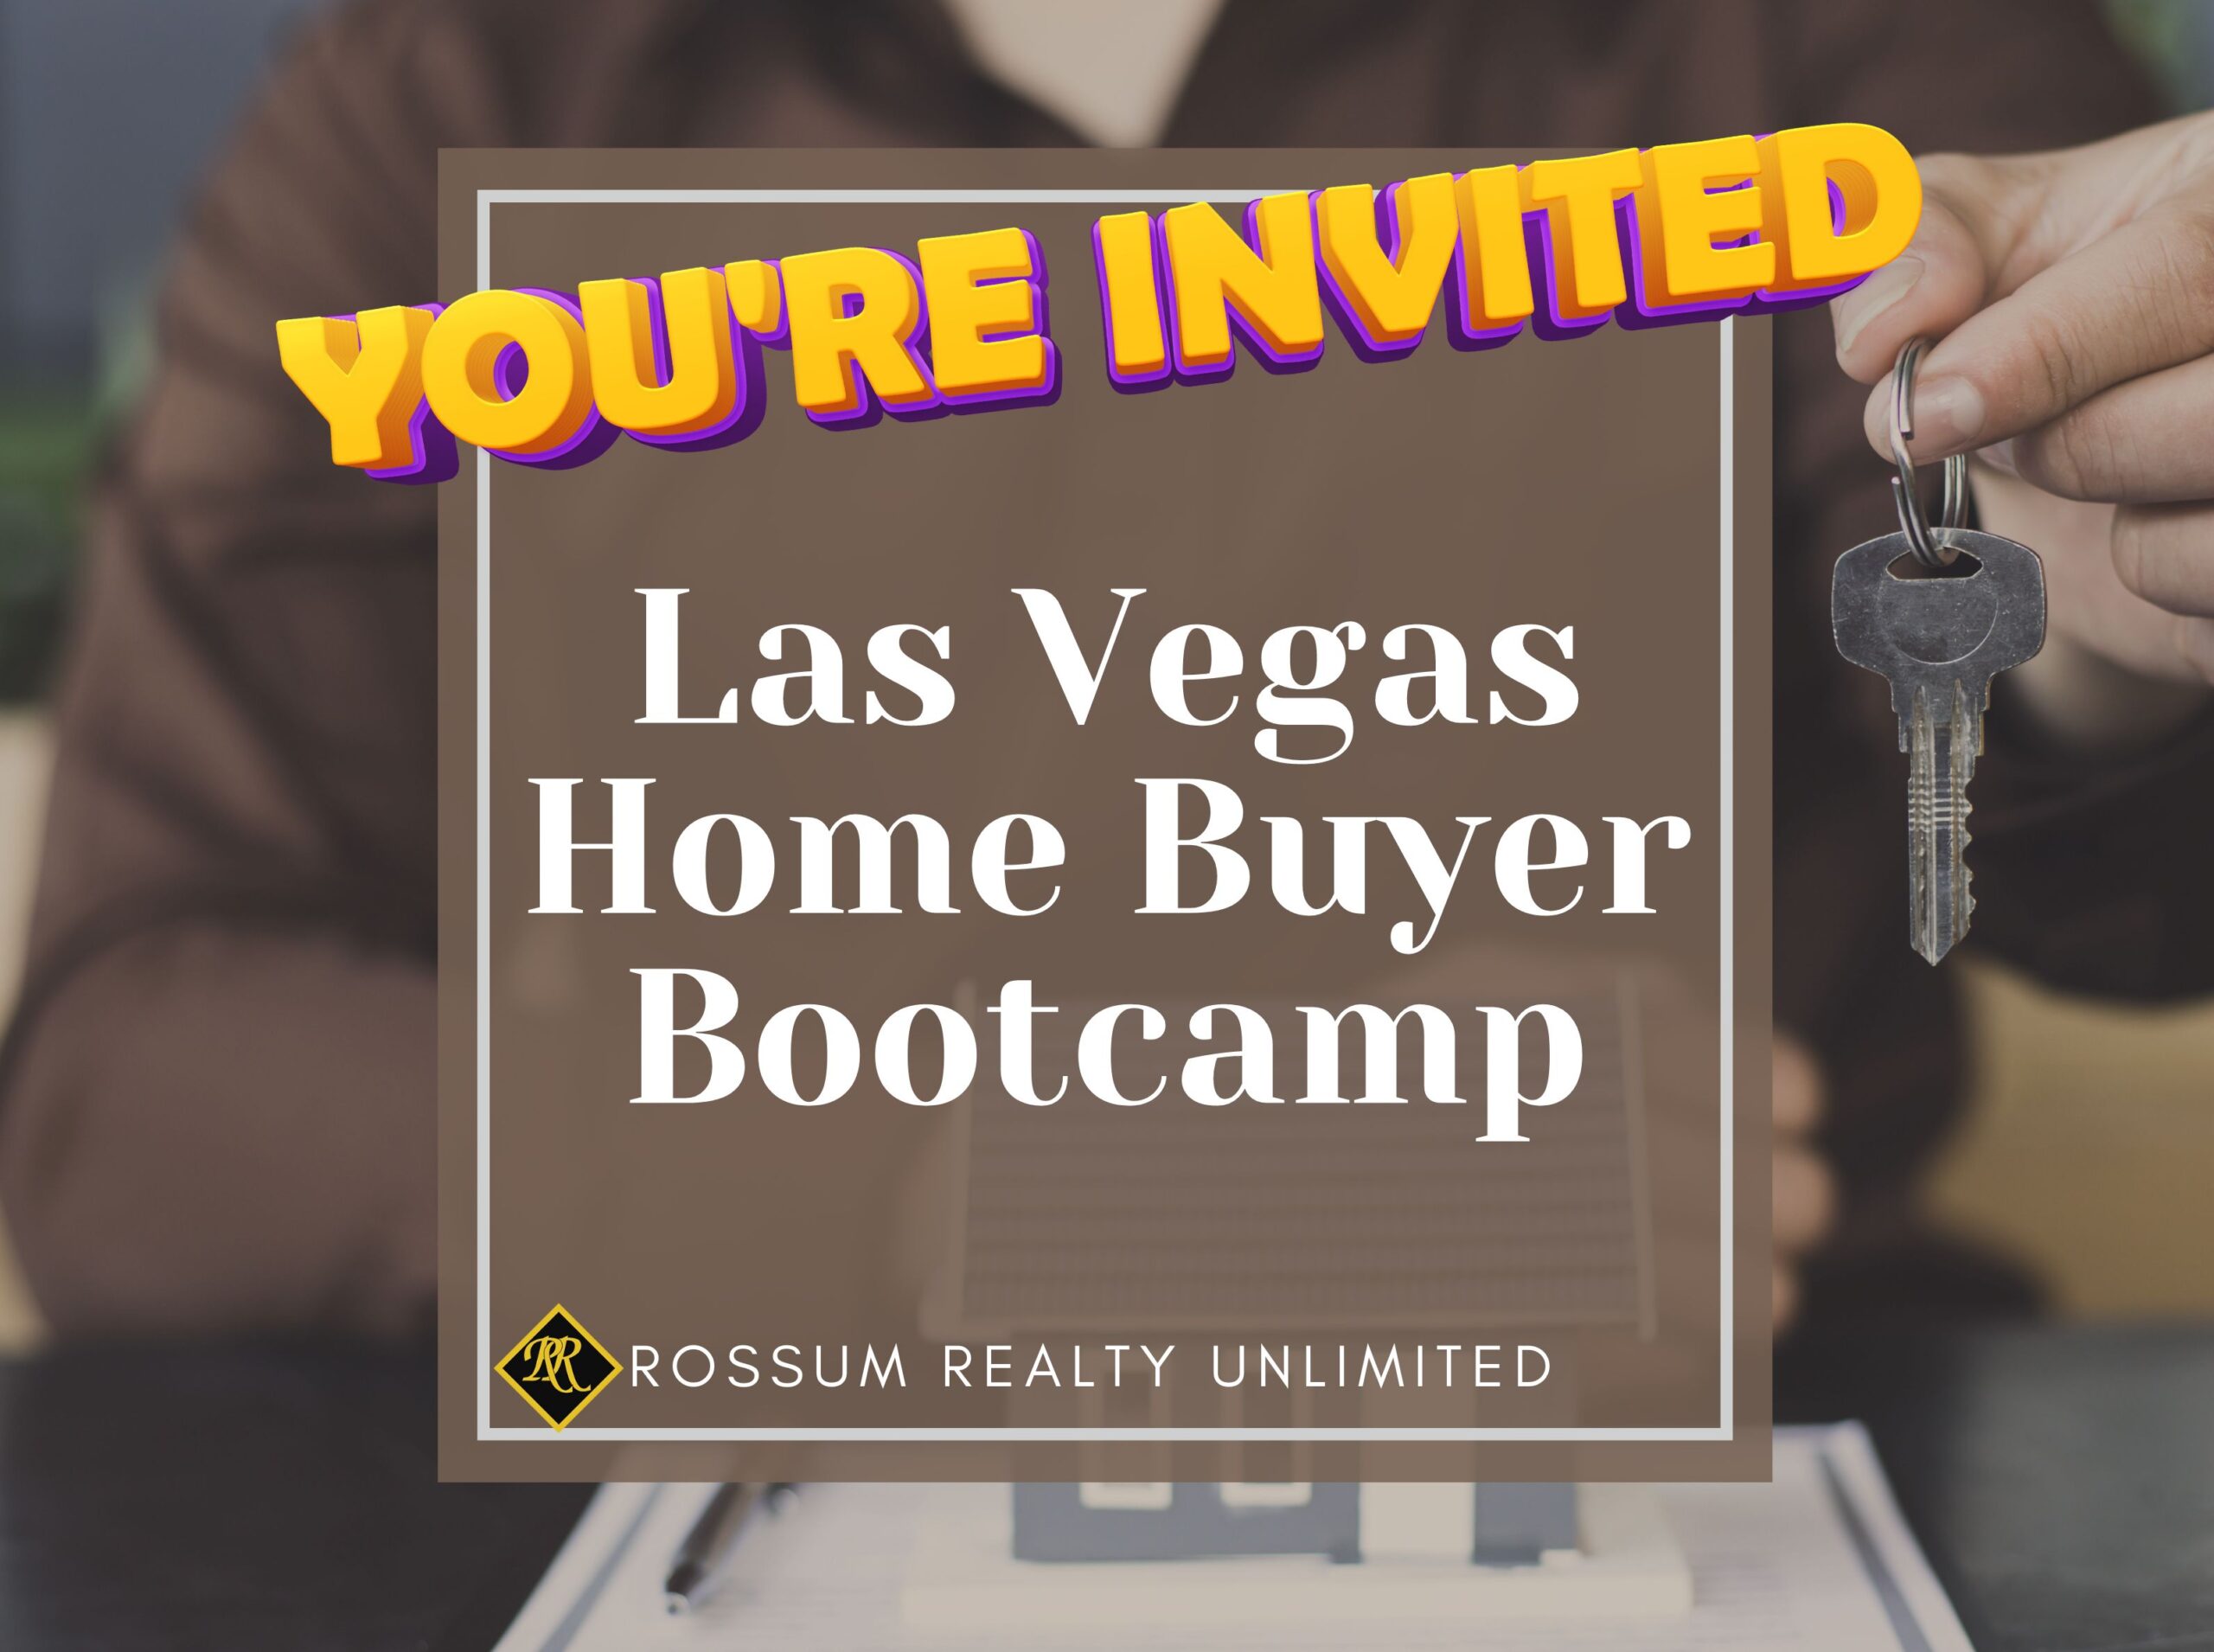 Las Vegas Home Buyer Bootcamp